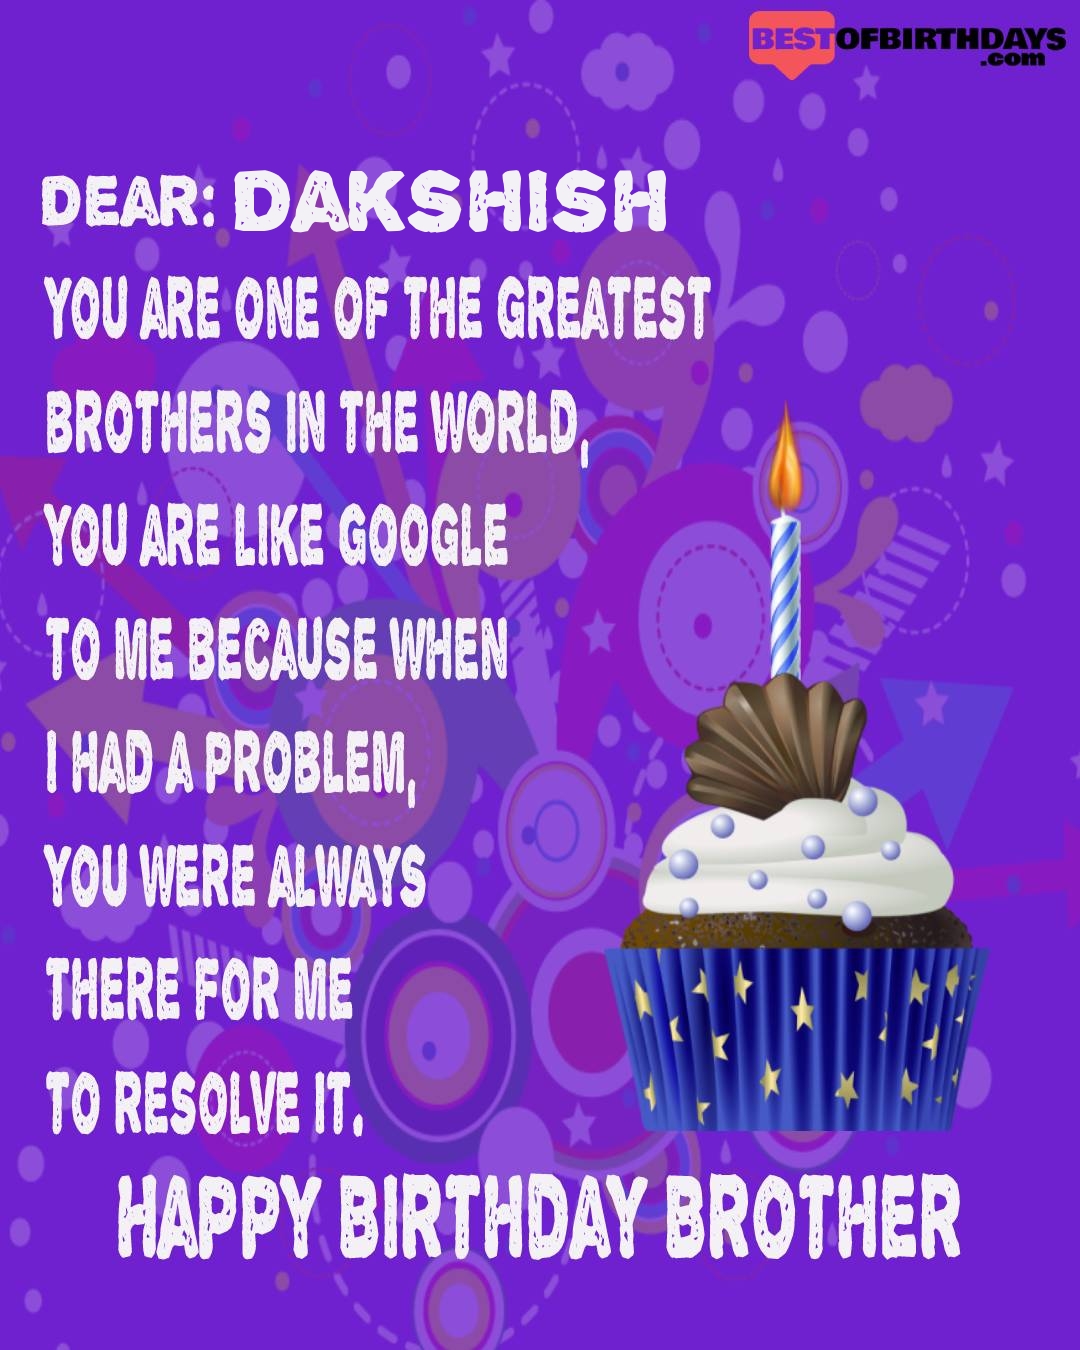 Happy birthday dakshish bhai brother bro